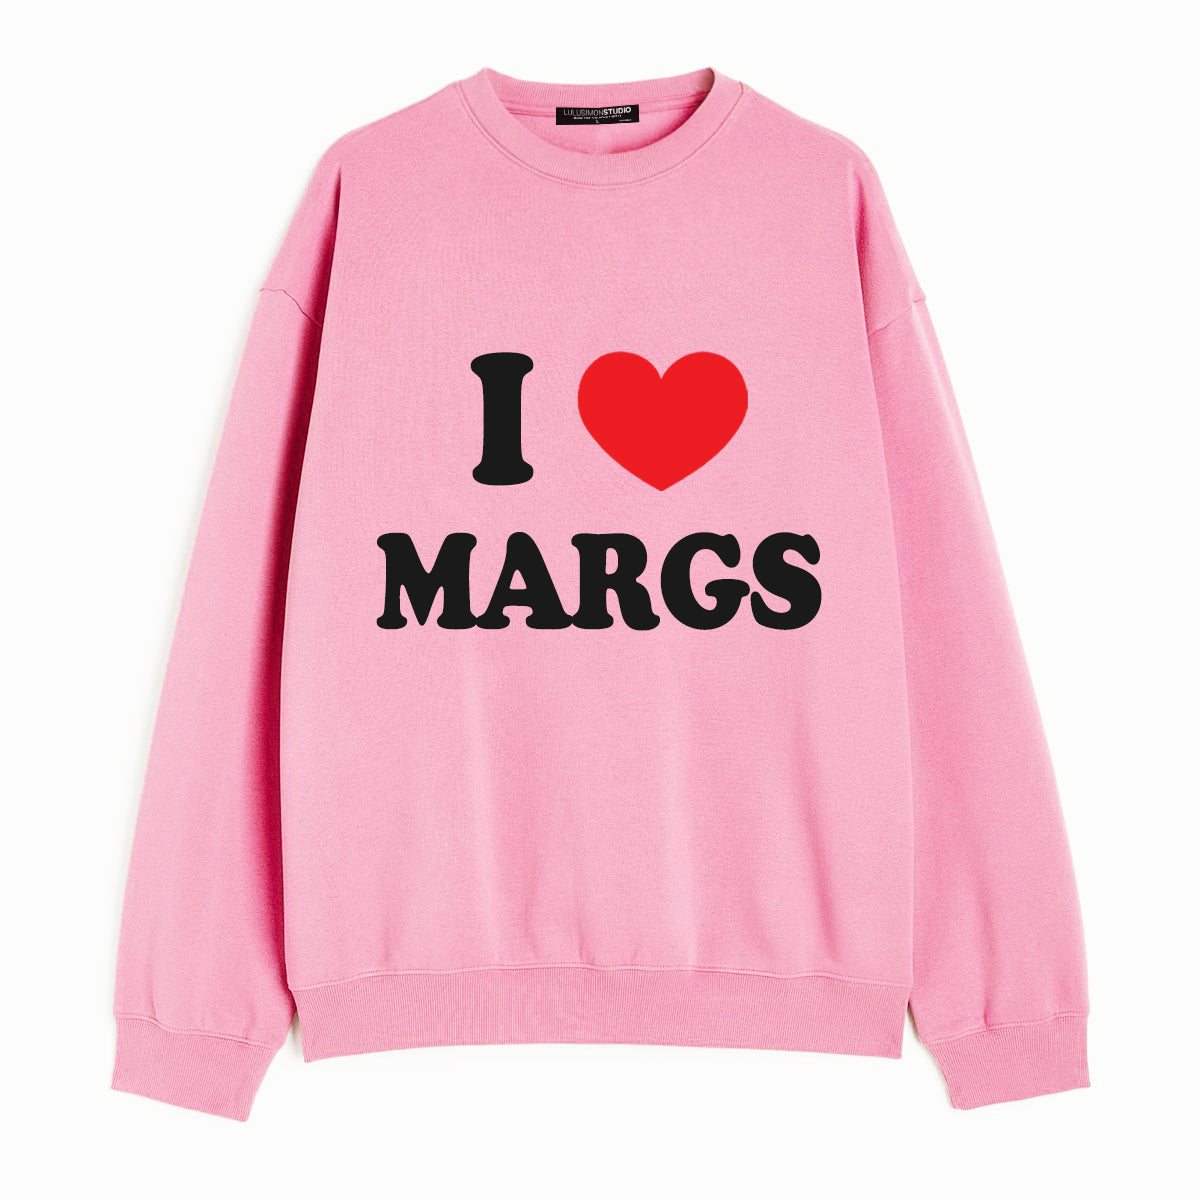 I Love Margs Sweatshirt